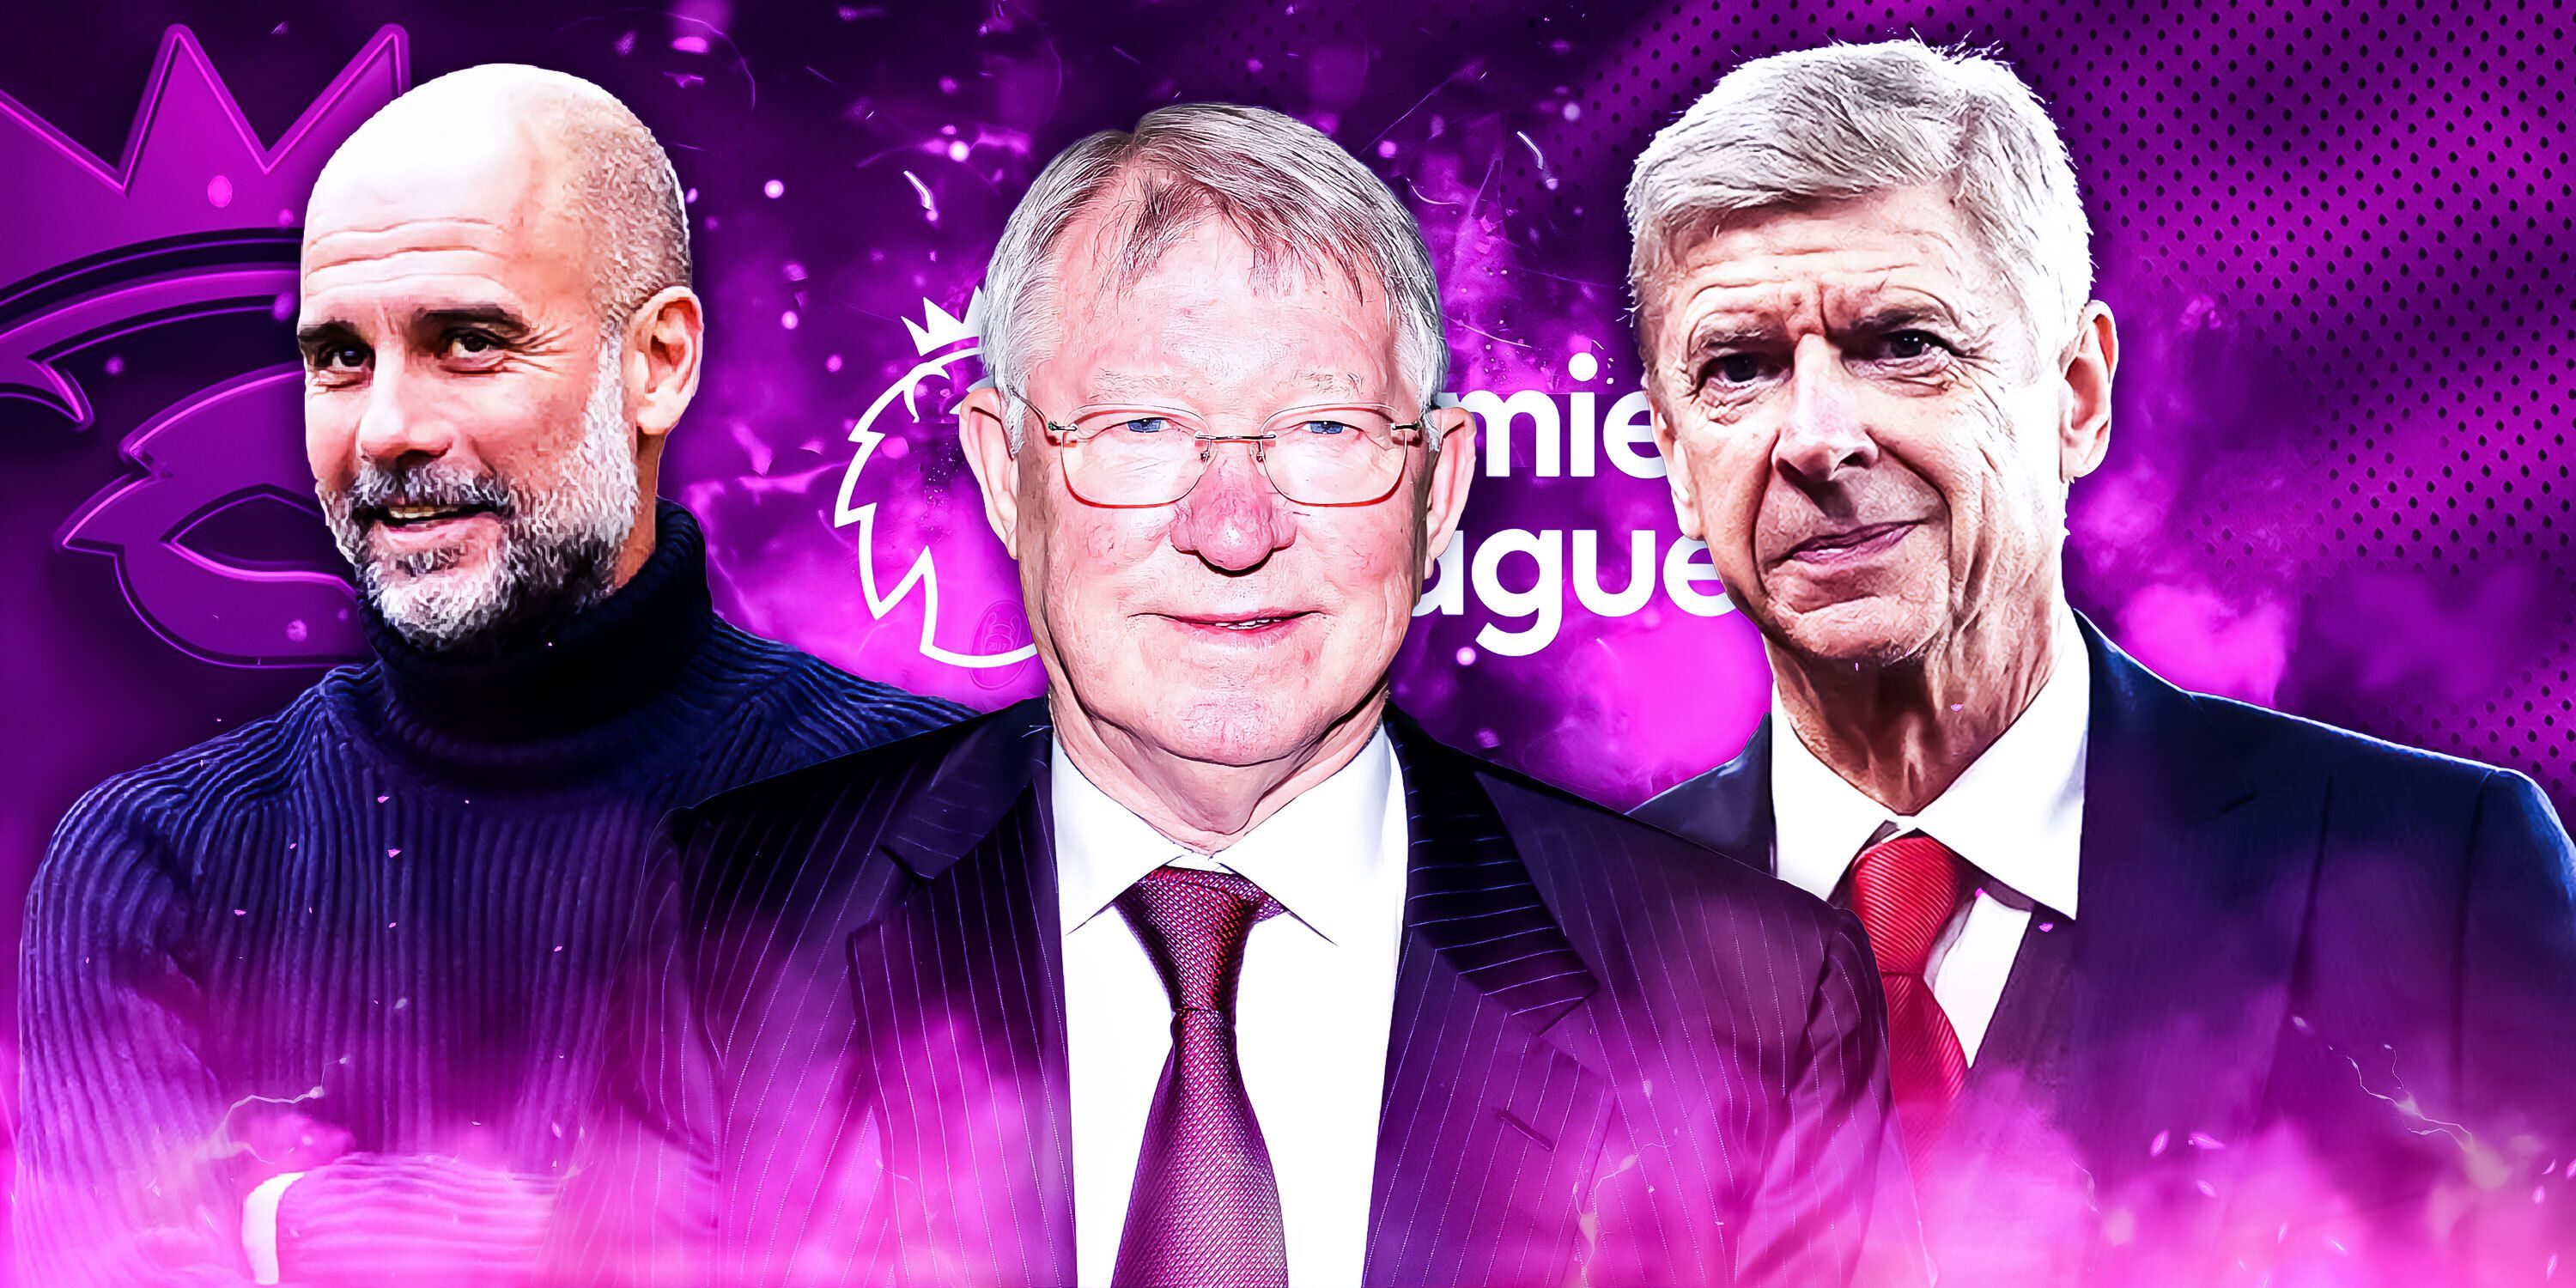 A custom image of Pep Guardiola, Sir Alex Ferguson and Arsene Wenger